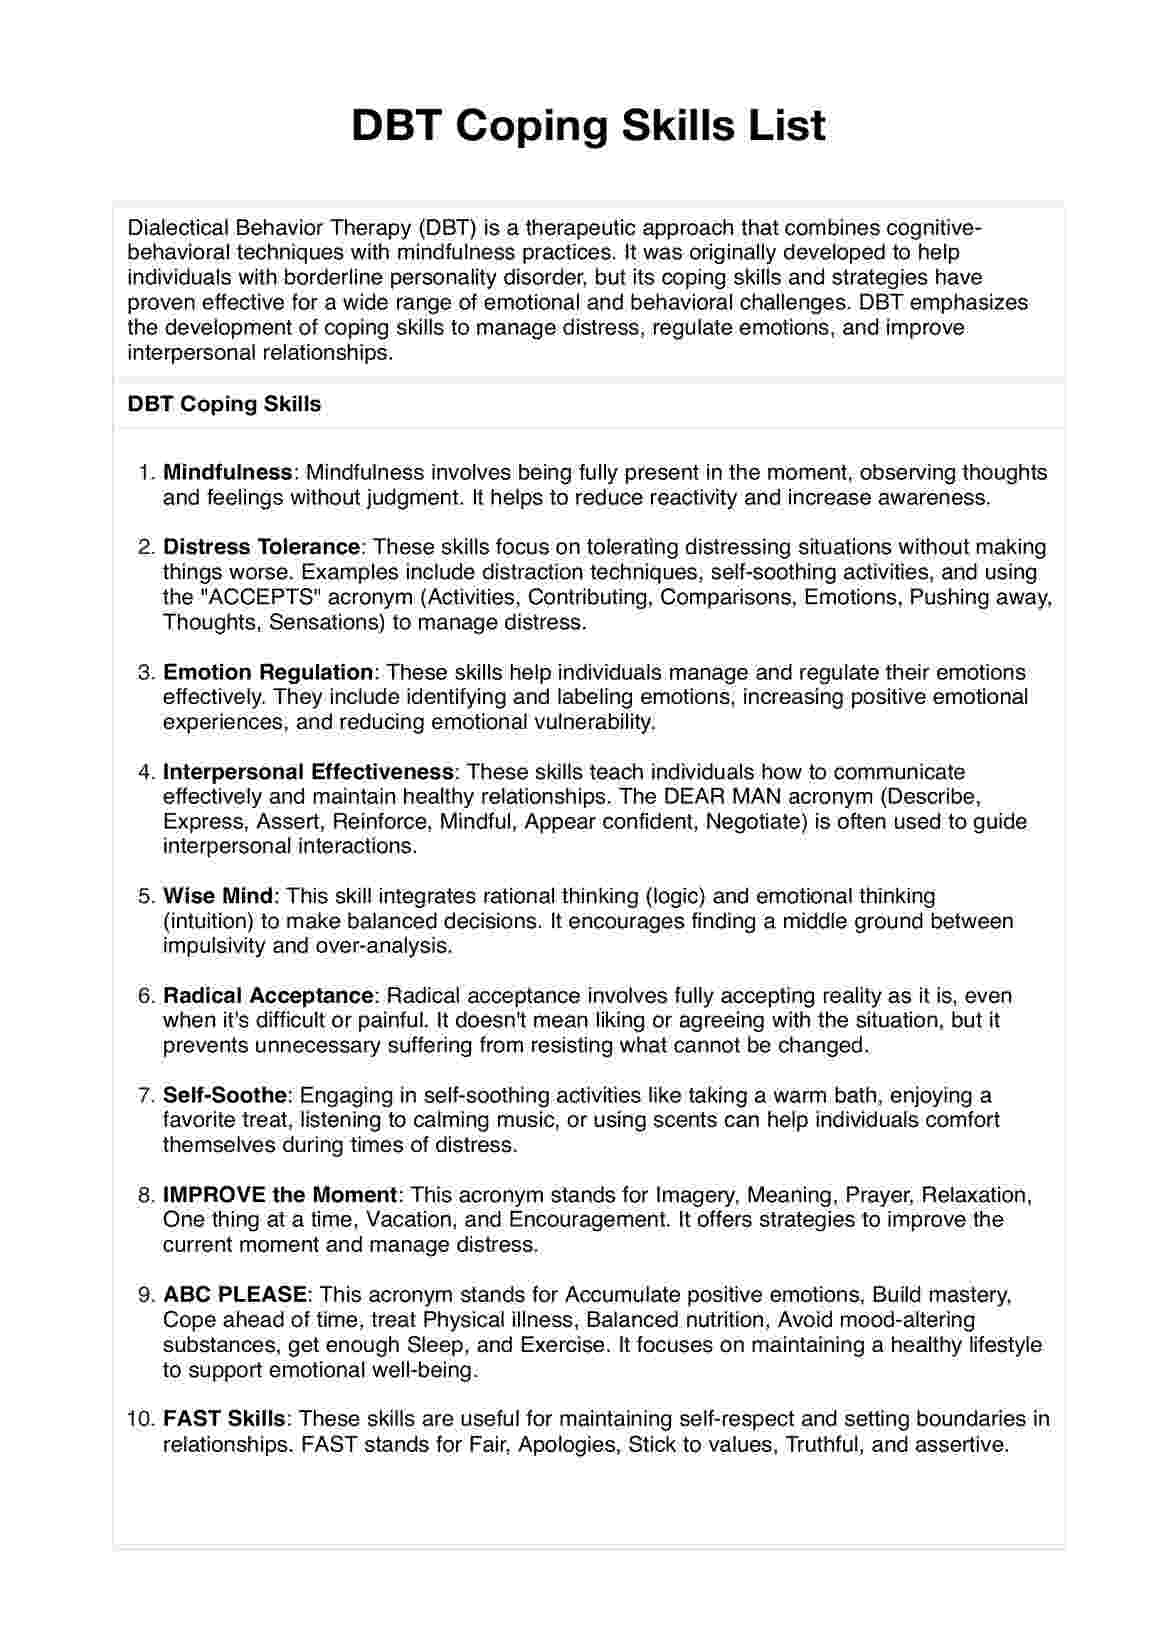 DBT Coping Skills List PDF Example